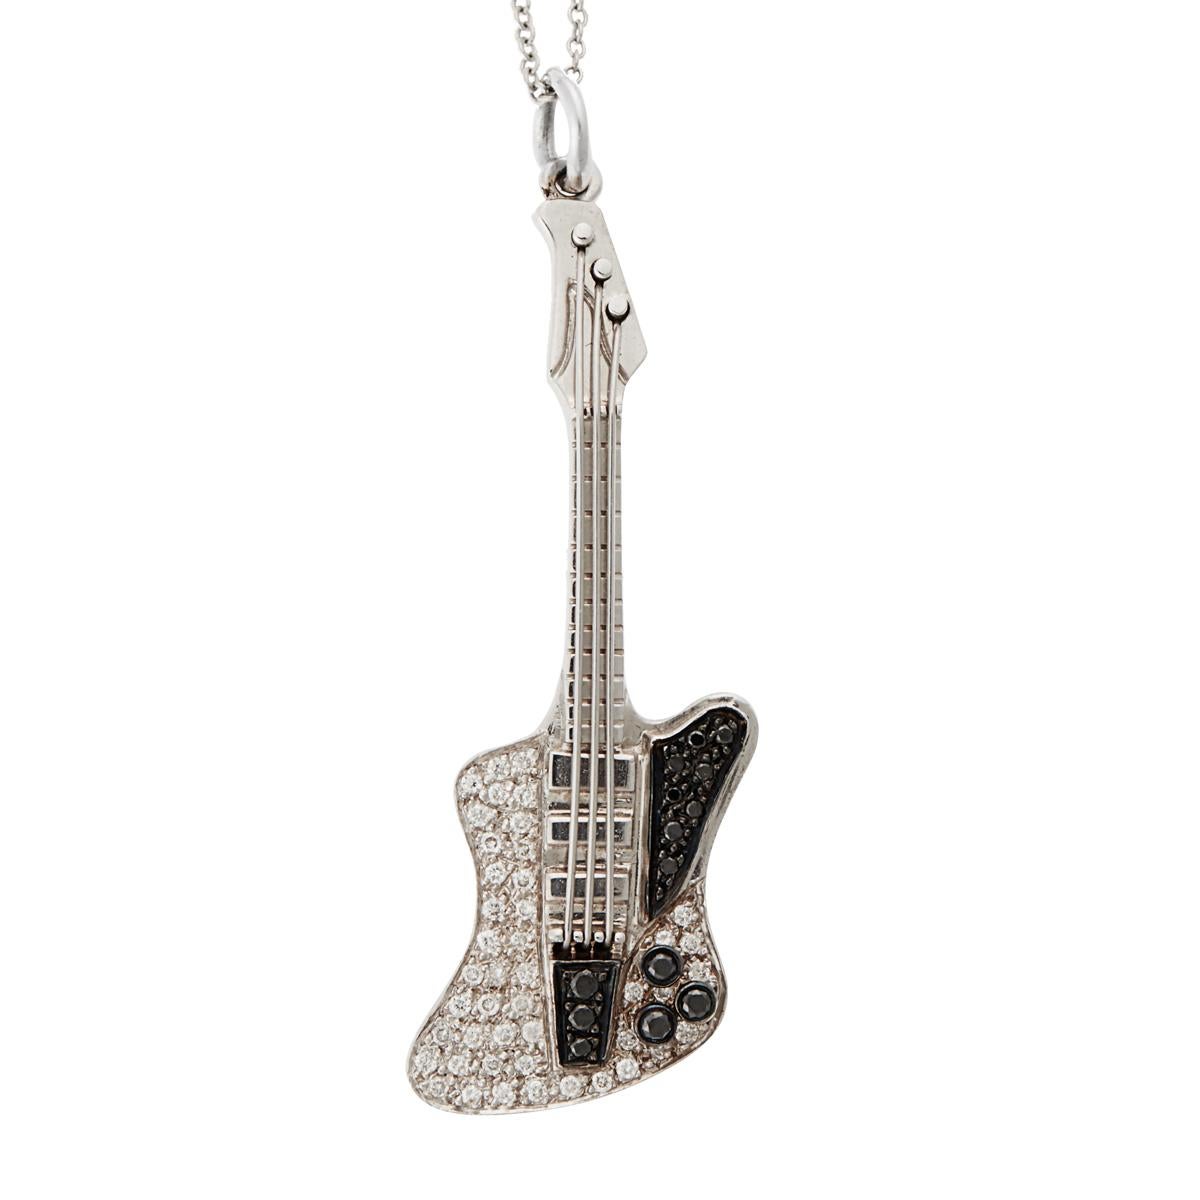 Ileana Makri 18k Gold Electric Guitar pendant set with Black and White Diamonds For Sale